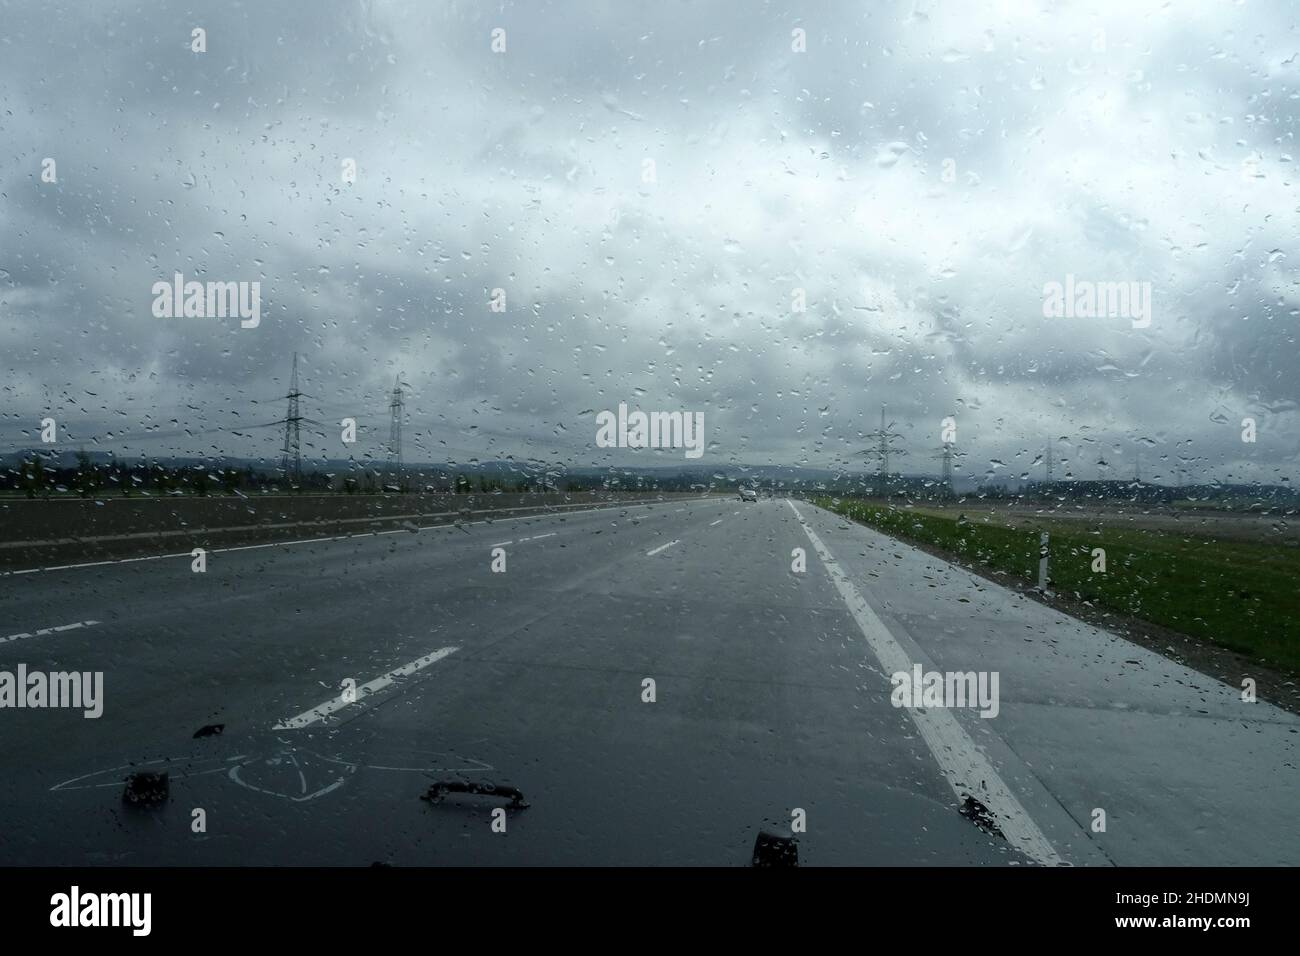 highway, driving, rain, weather, aquaplaning, highways, motorway, motorways, drive, raining, weathers Stock Photo